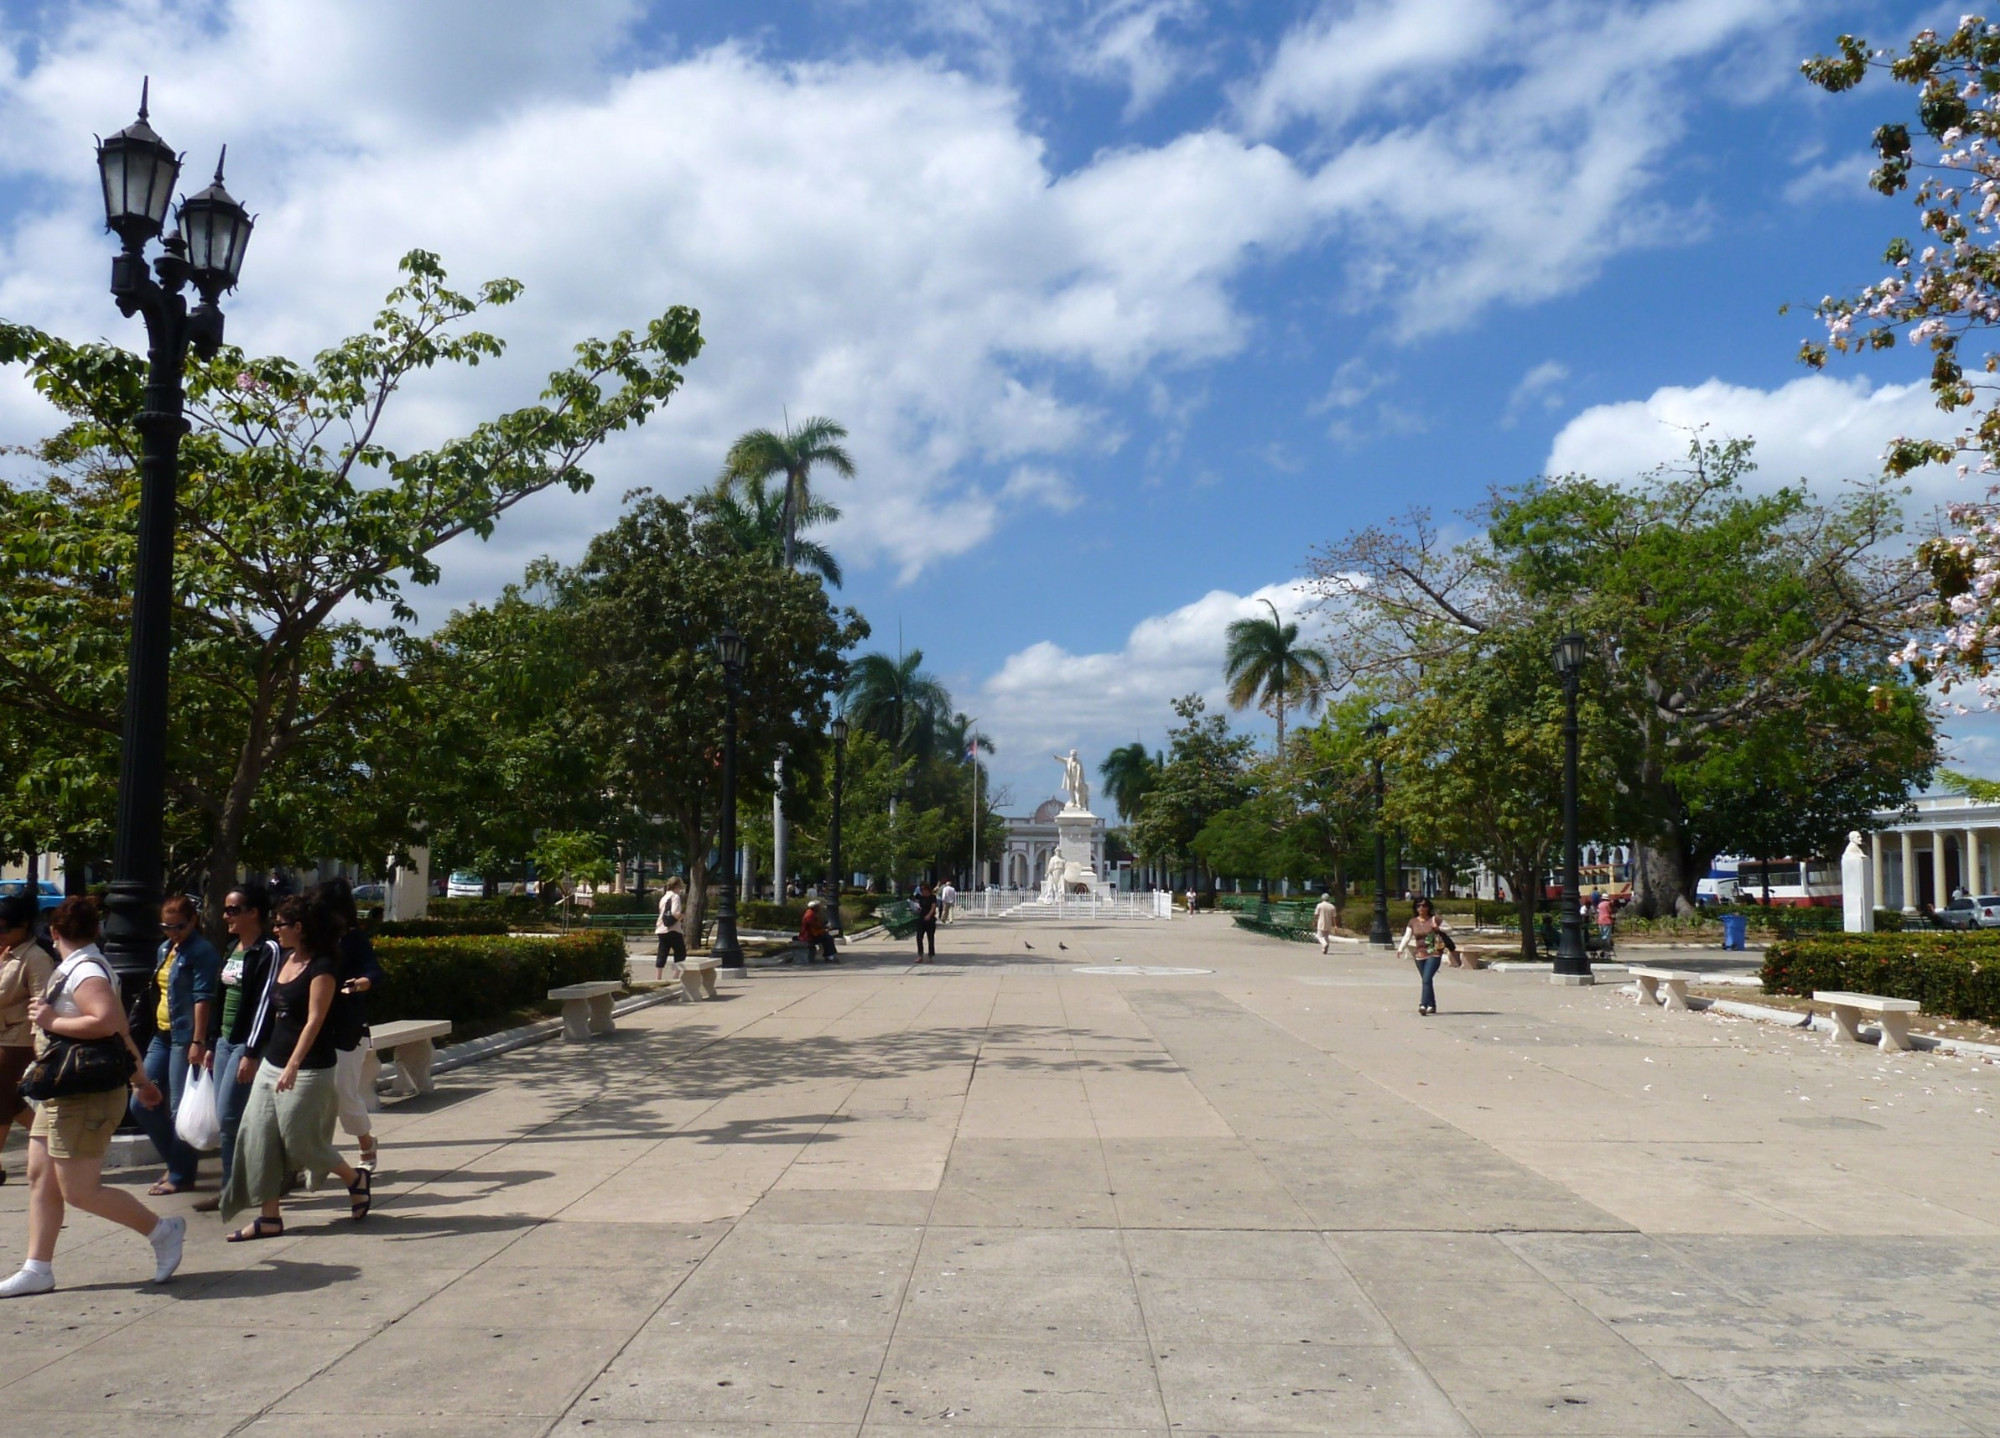 José Martí Park